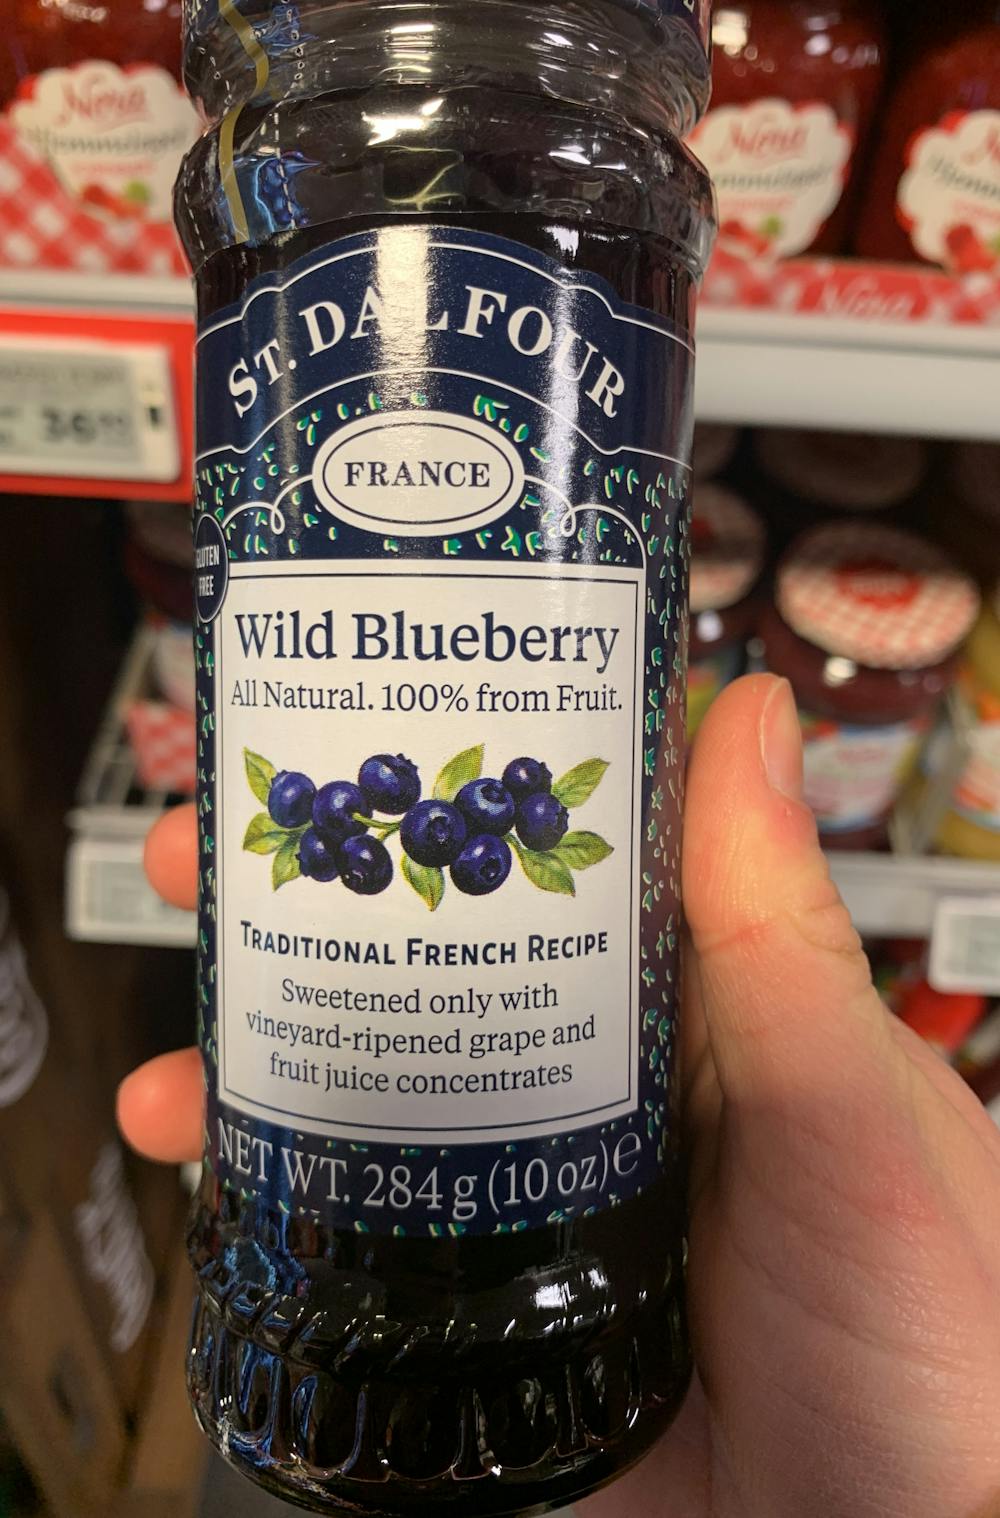 Wild blueberry, St. Dalfour